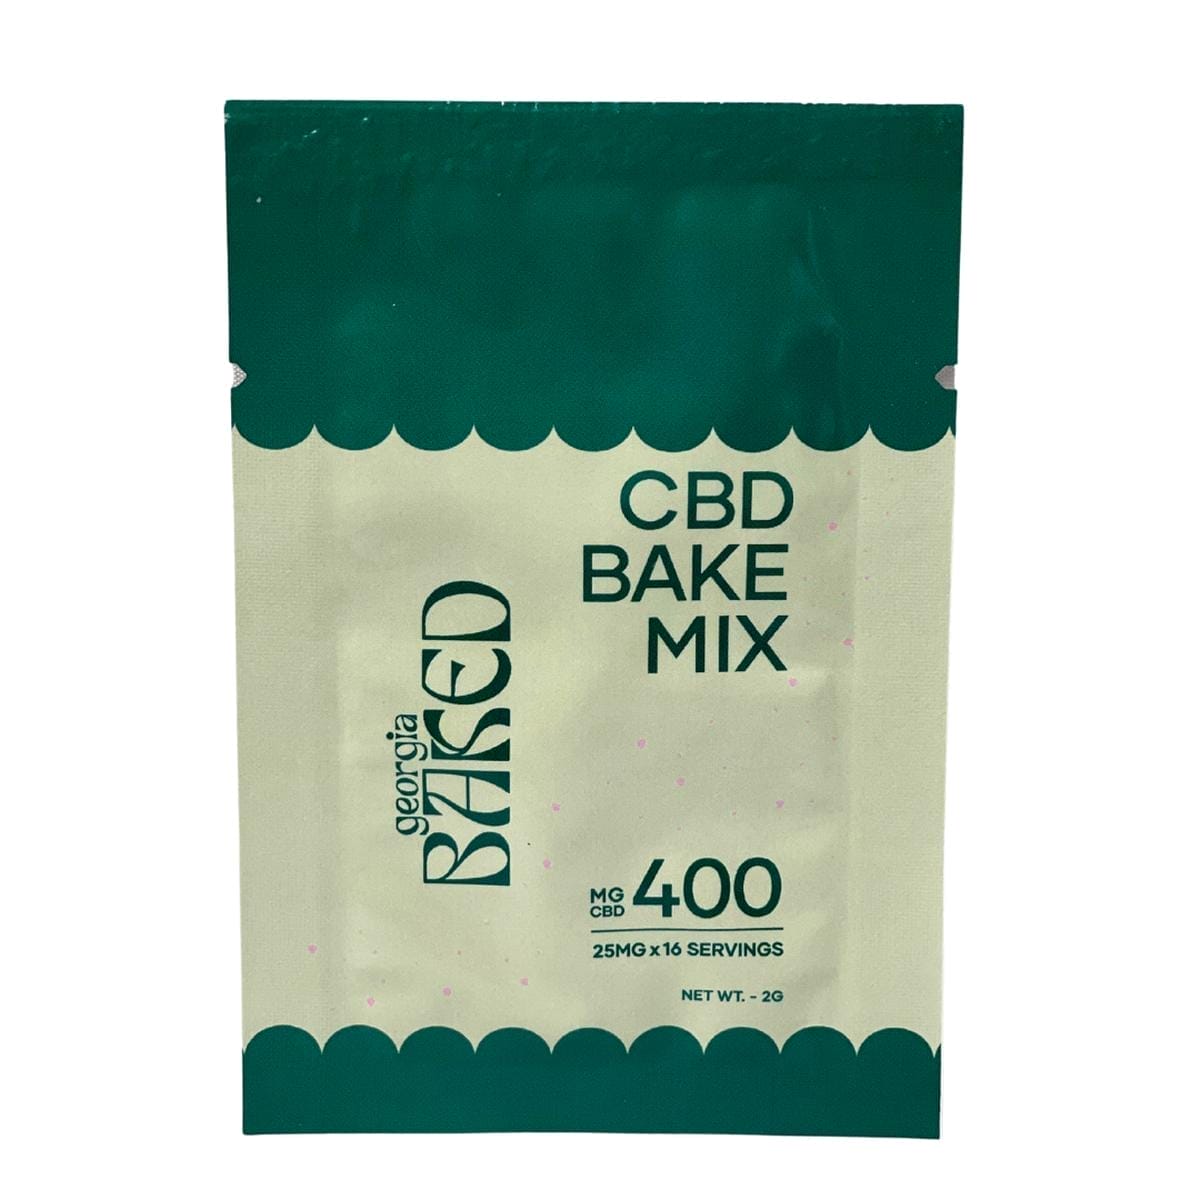 GHC 400mg CBD Bake Mix